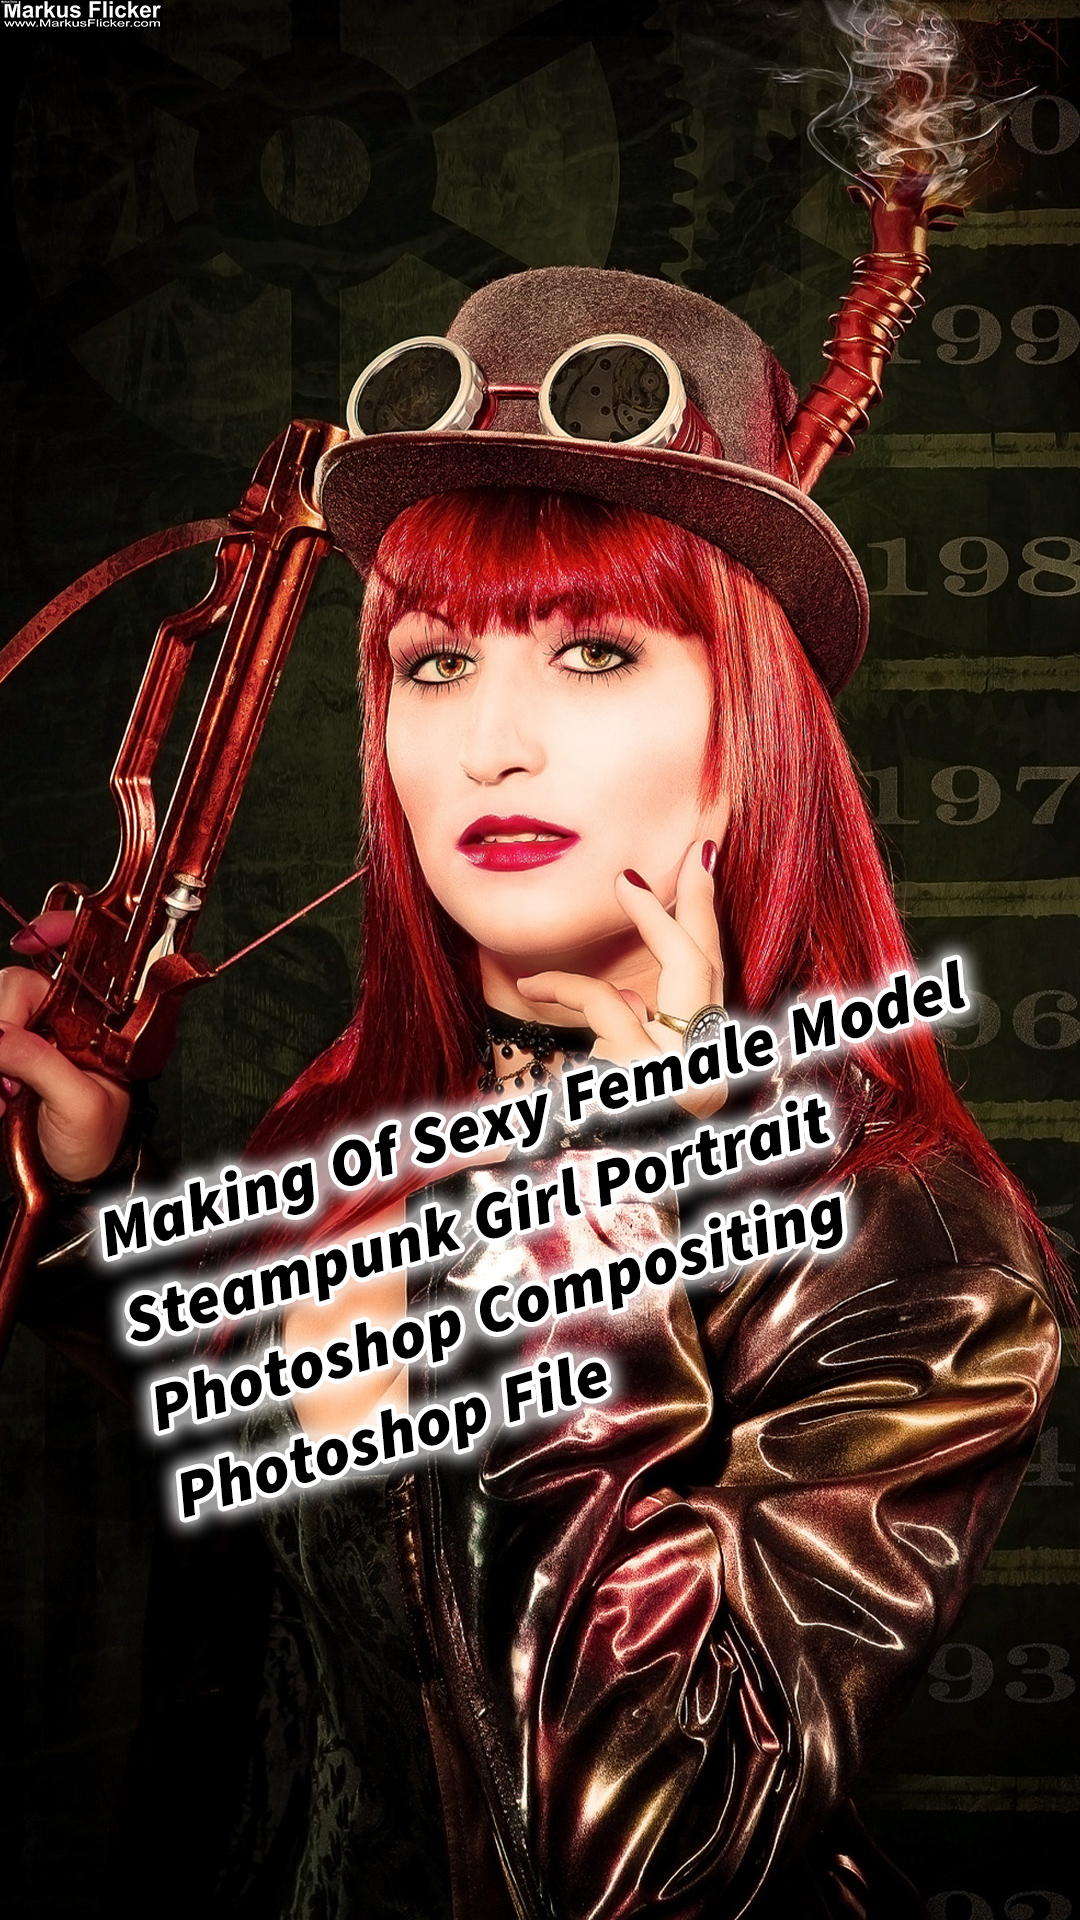 Sexy Female Model Fotoshooting Steampunk Girl Portrait Photoshop Compositing inkl. Making Of, Requisiten und Bildbearbeitung